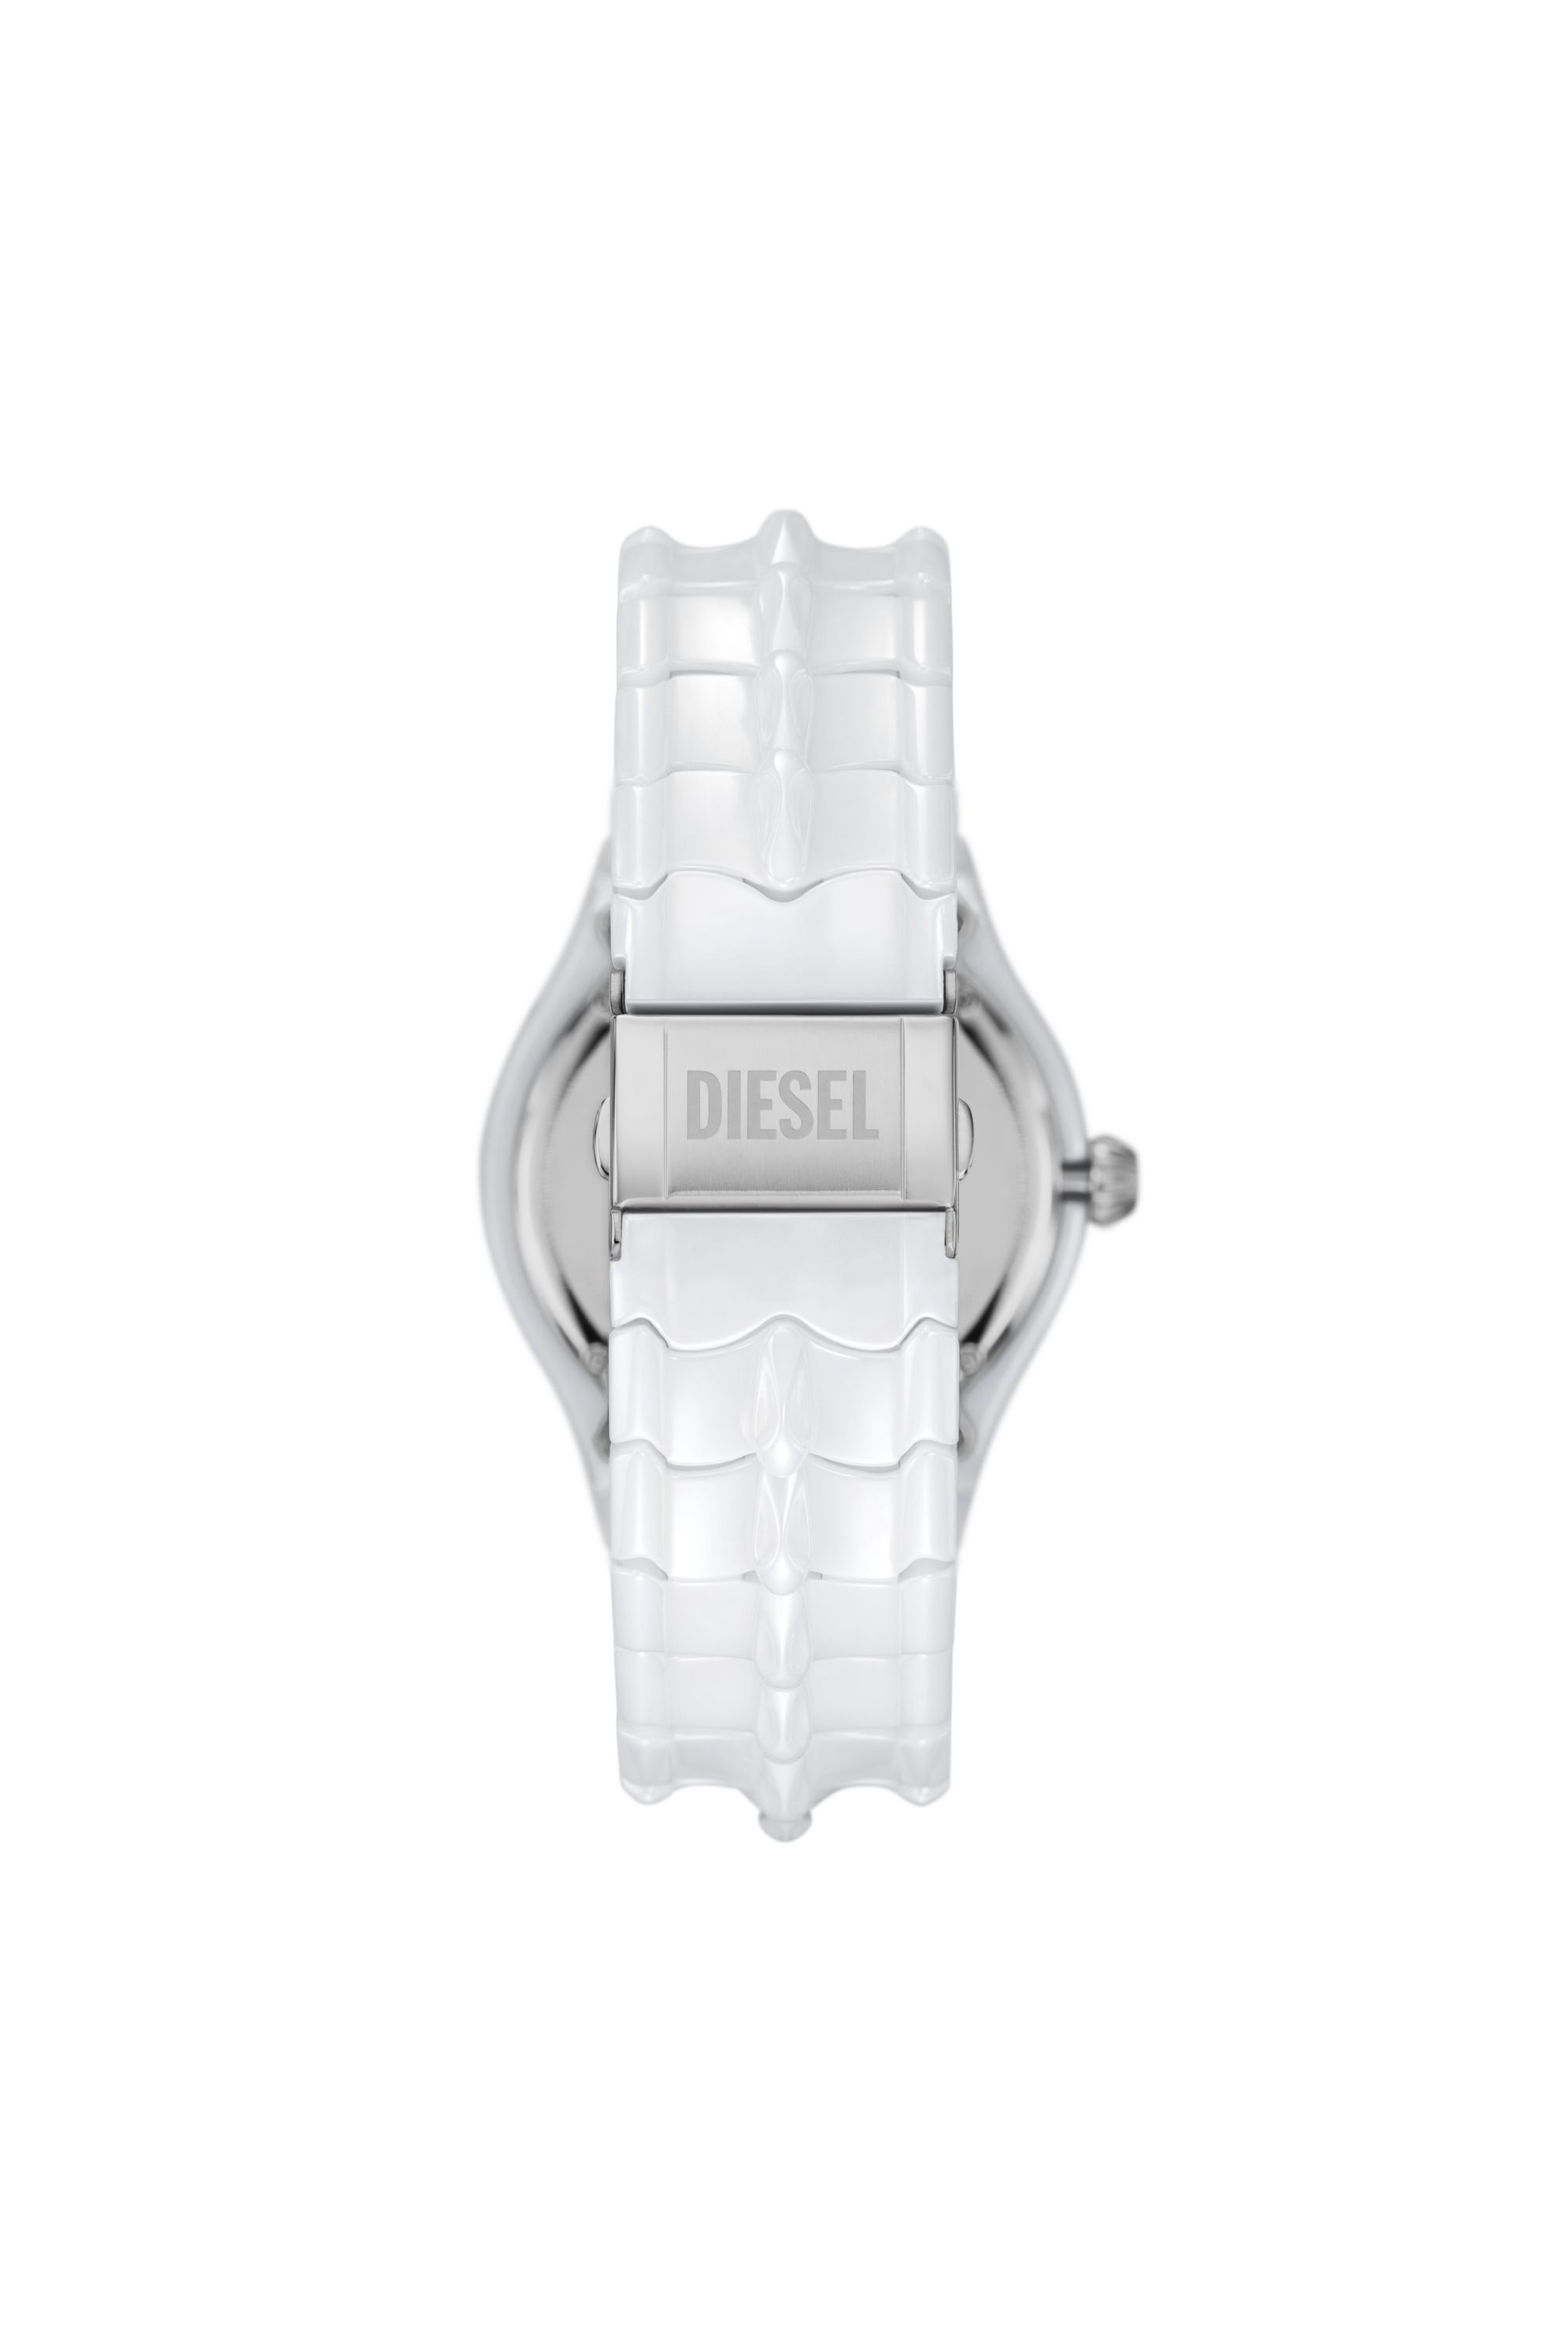 Diesel - DZ2197, Homme Montre Vert en céramique blanche in Blanc - Image 2